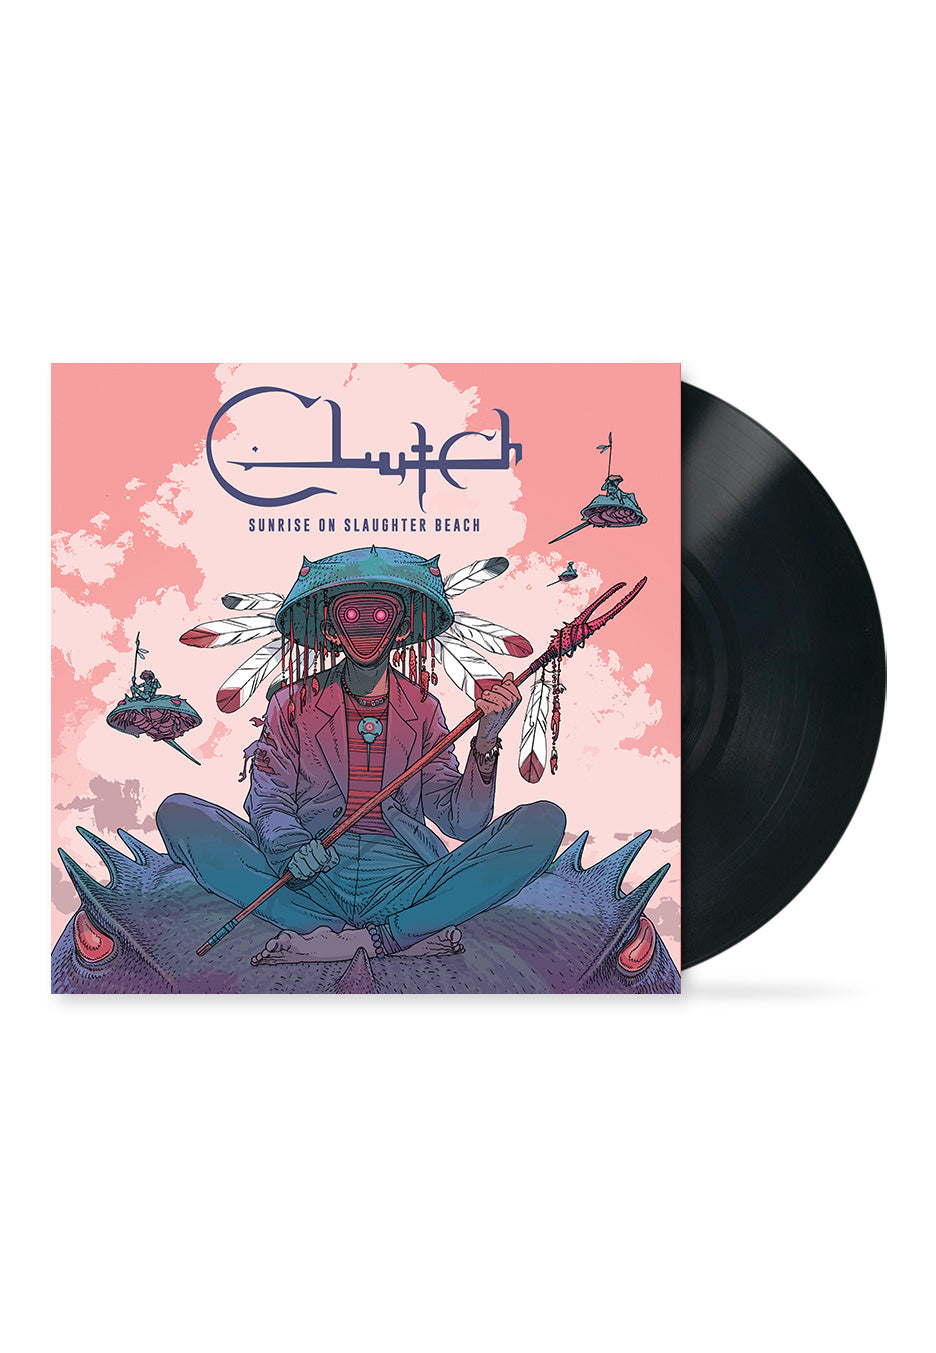 Clutch - Sunrise On Slaughter Beach - Vinyl